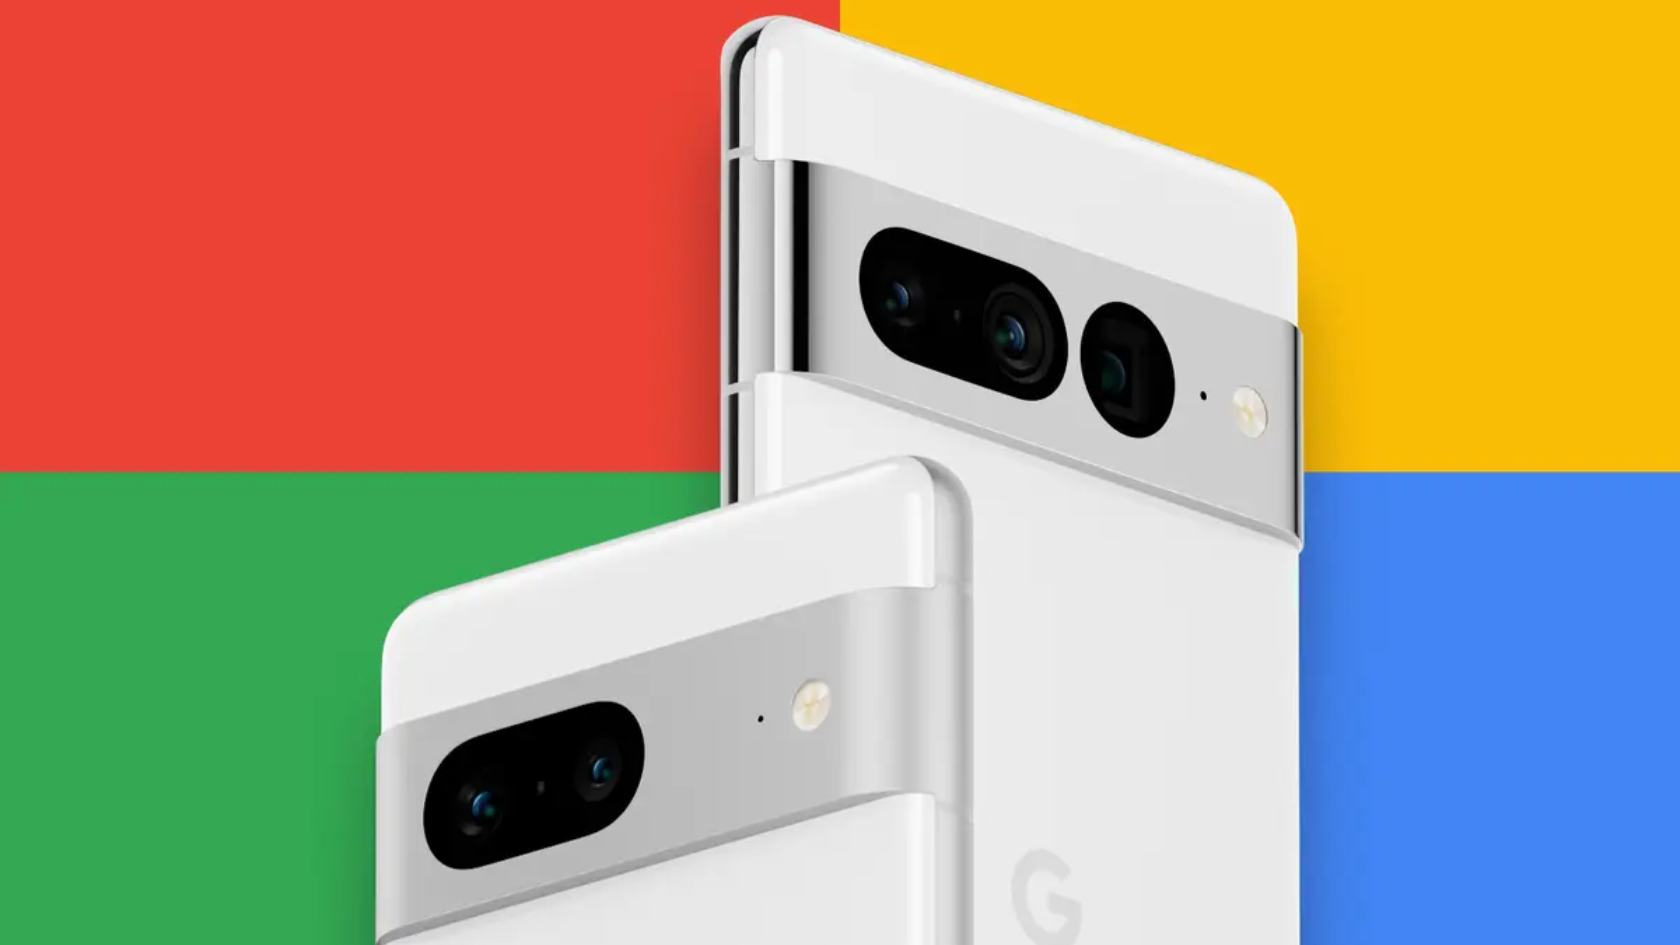 Google Pixel smartphone with camera lens focused on a stunning landscape